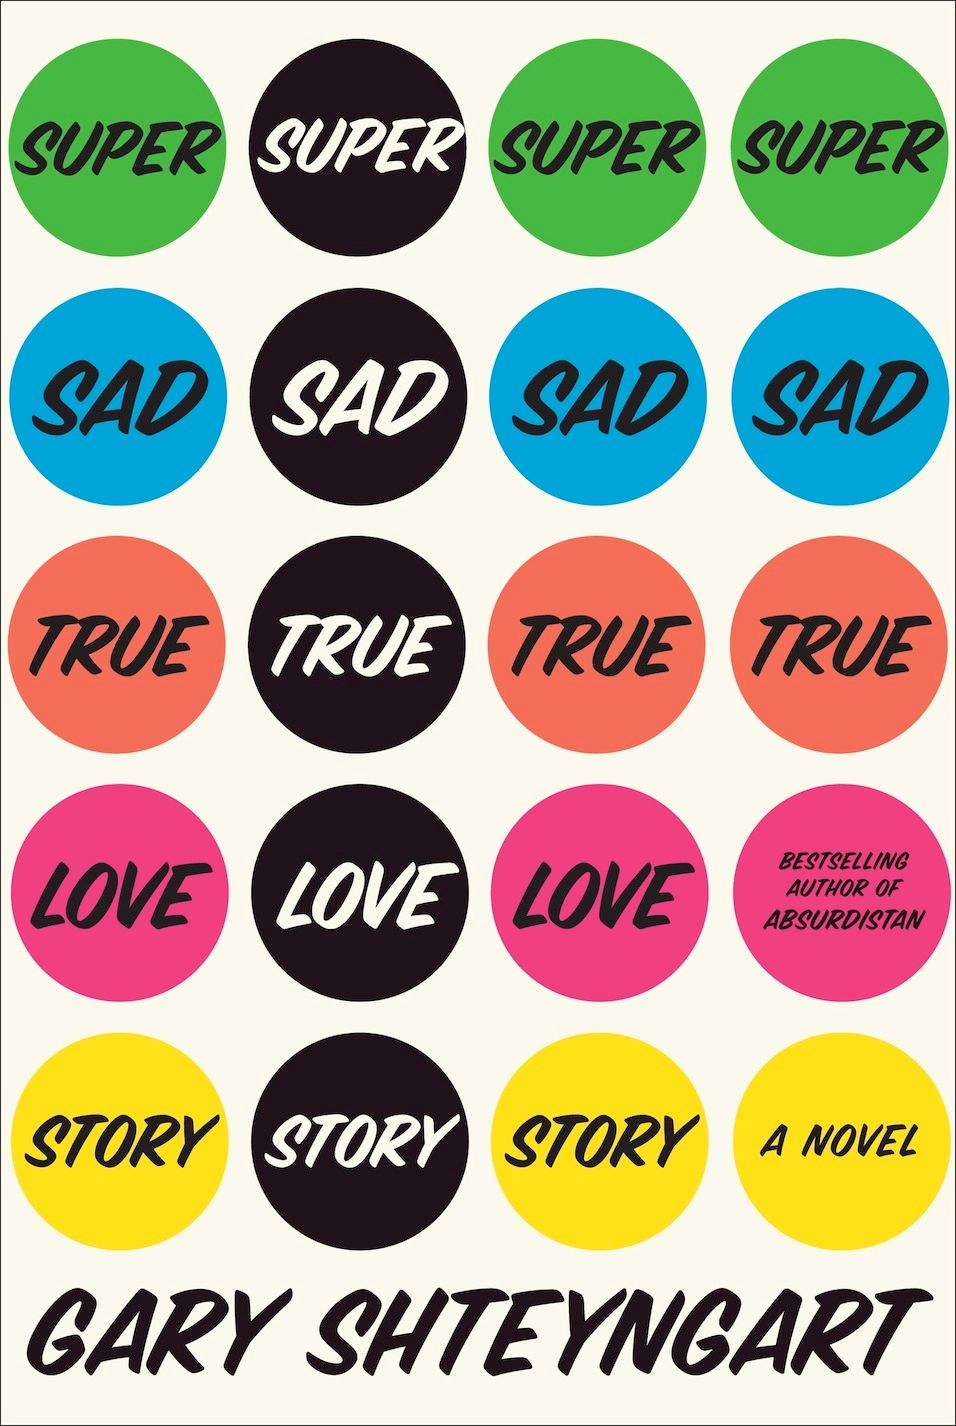 super-sad-true-love-story-cover